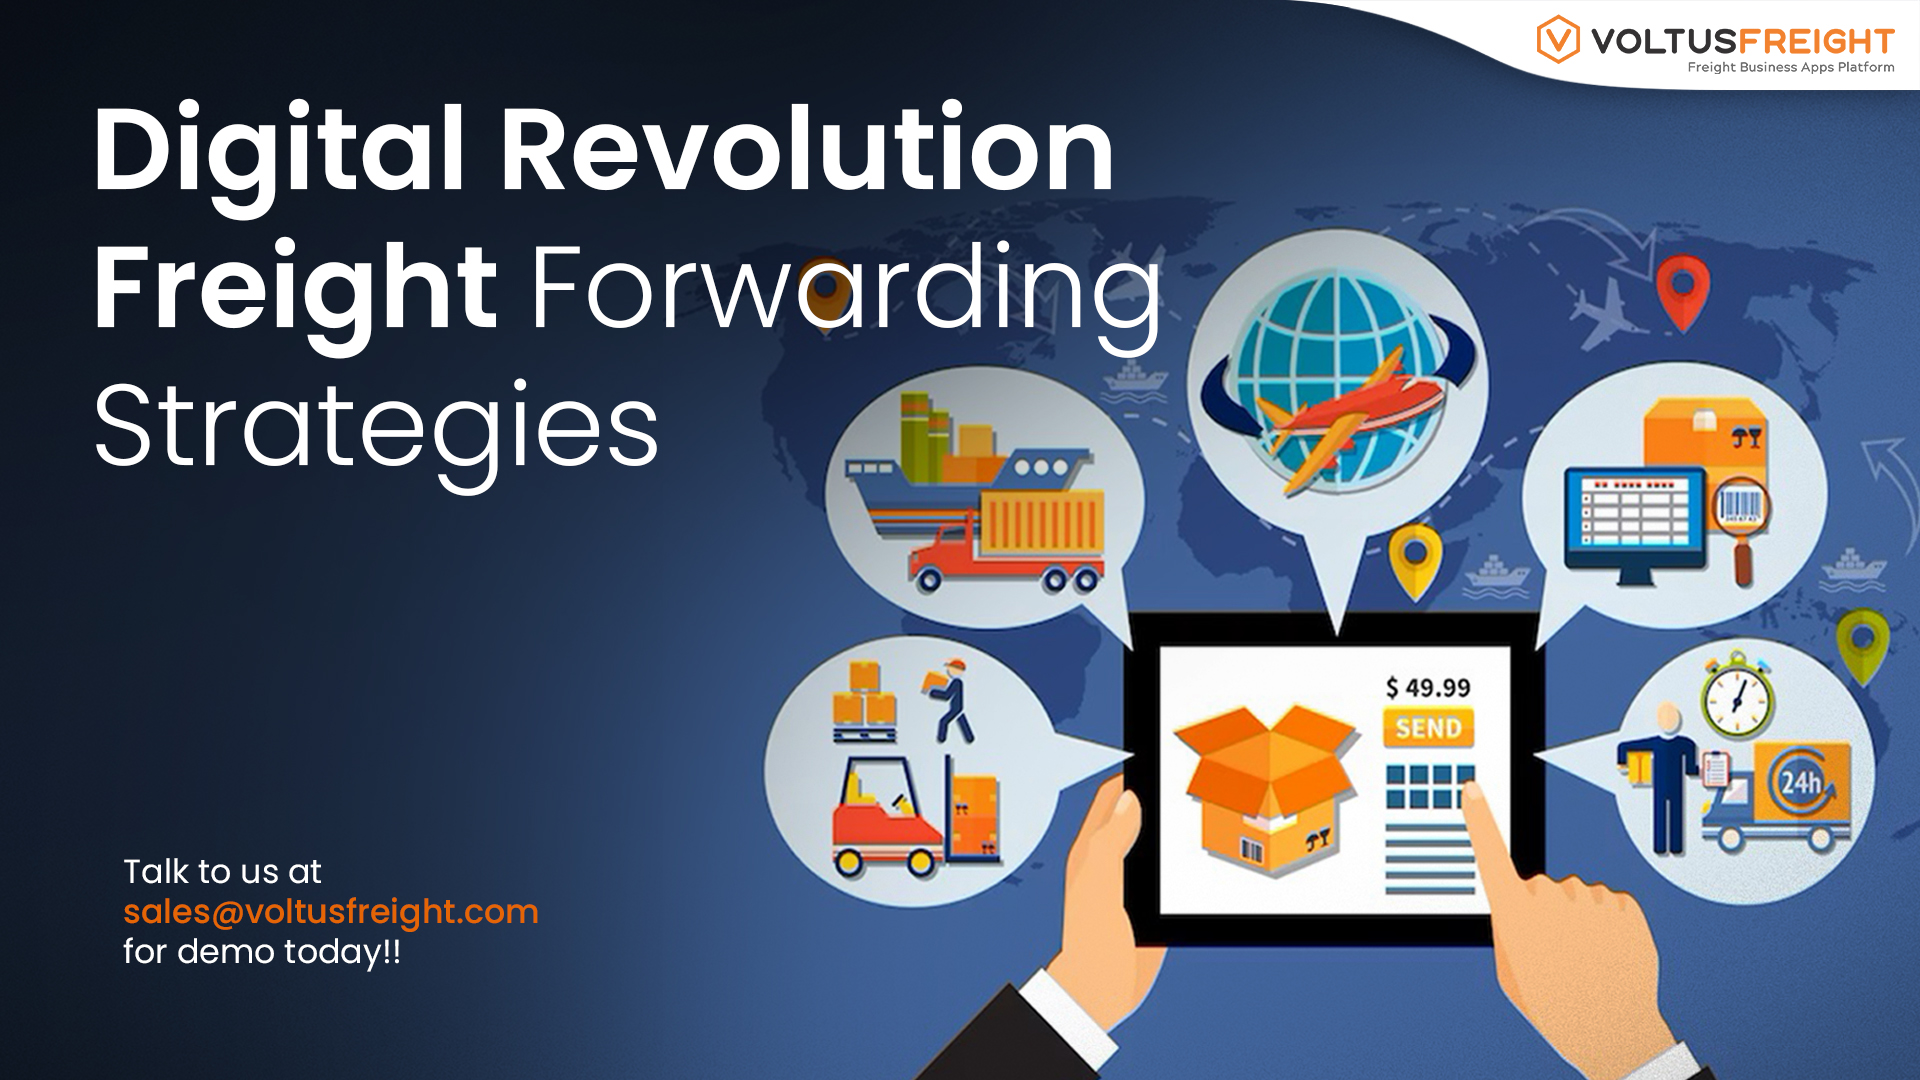 Digital Revolution Freight Forwarding Strategies